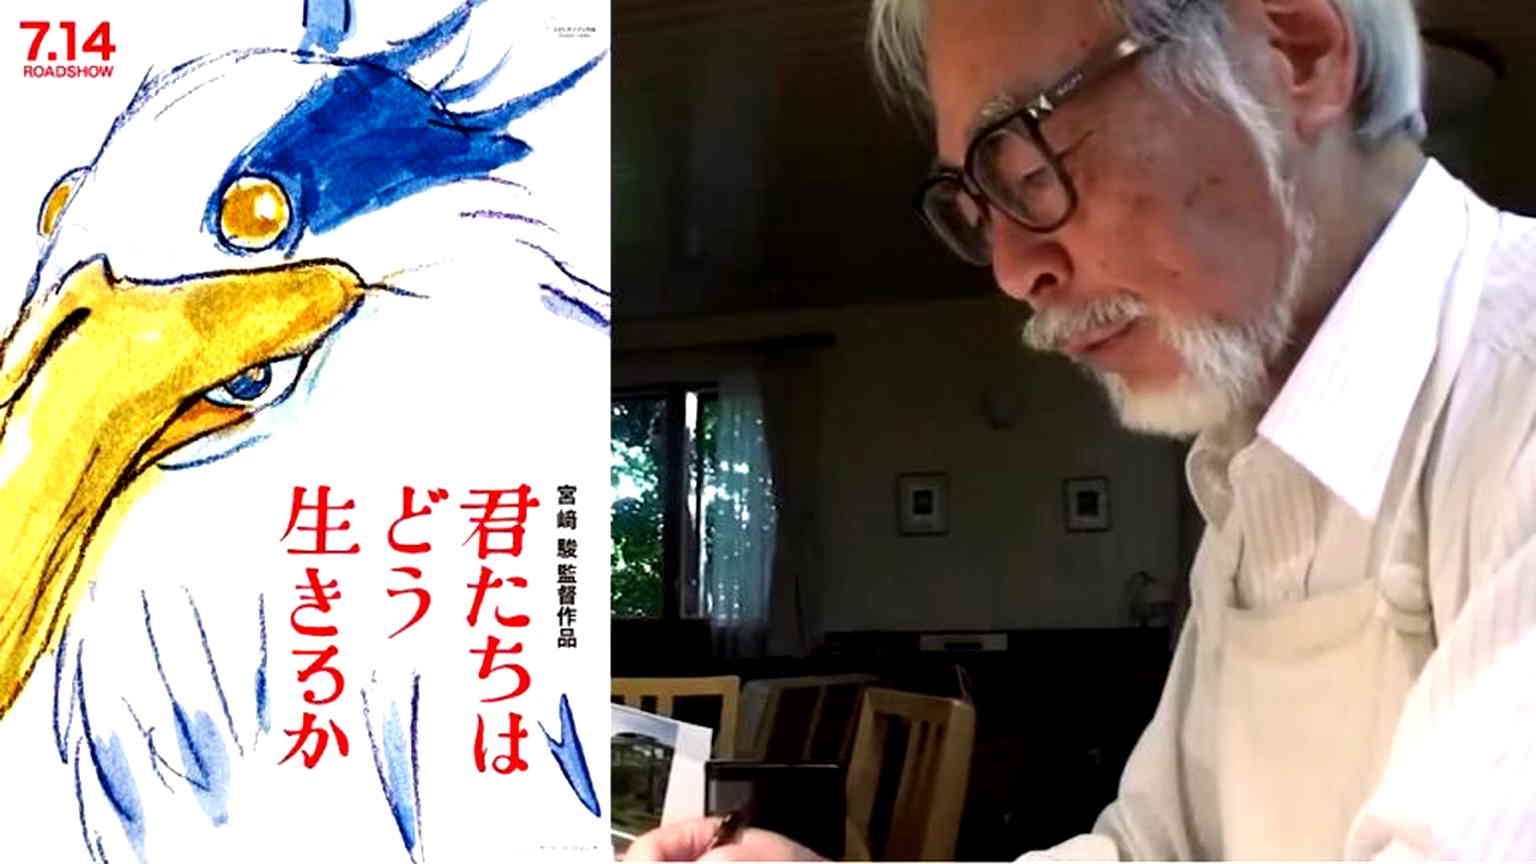 Studio Ghibli announces ‘The Boy and the Heron’ movie program containing film’s secret details